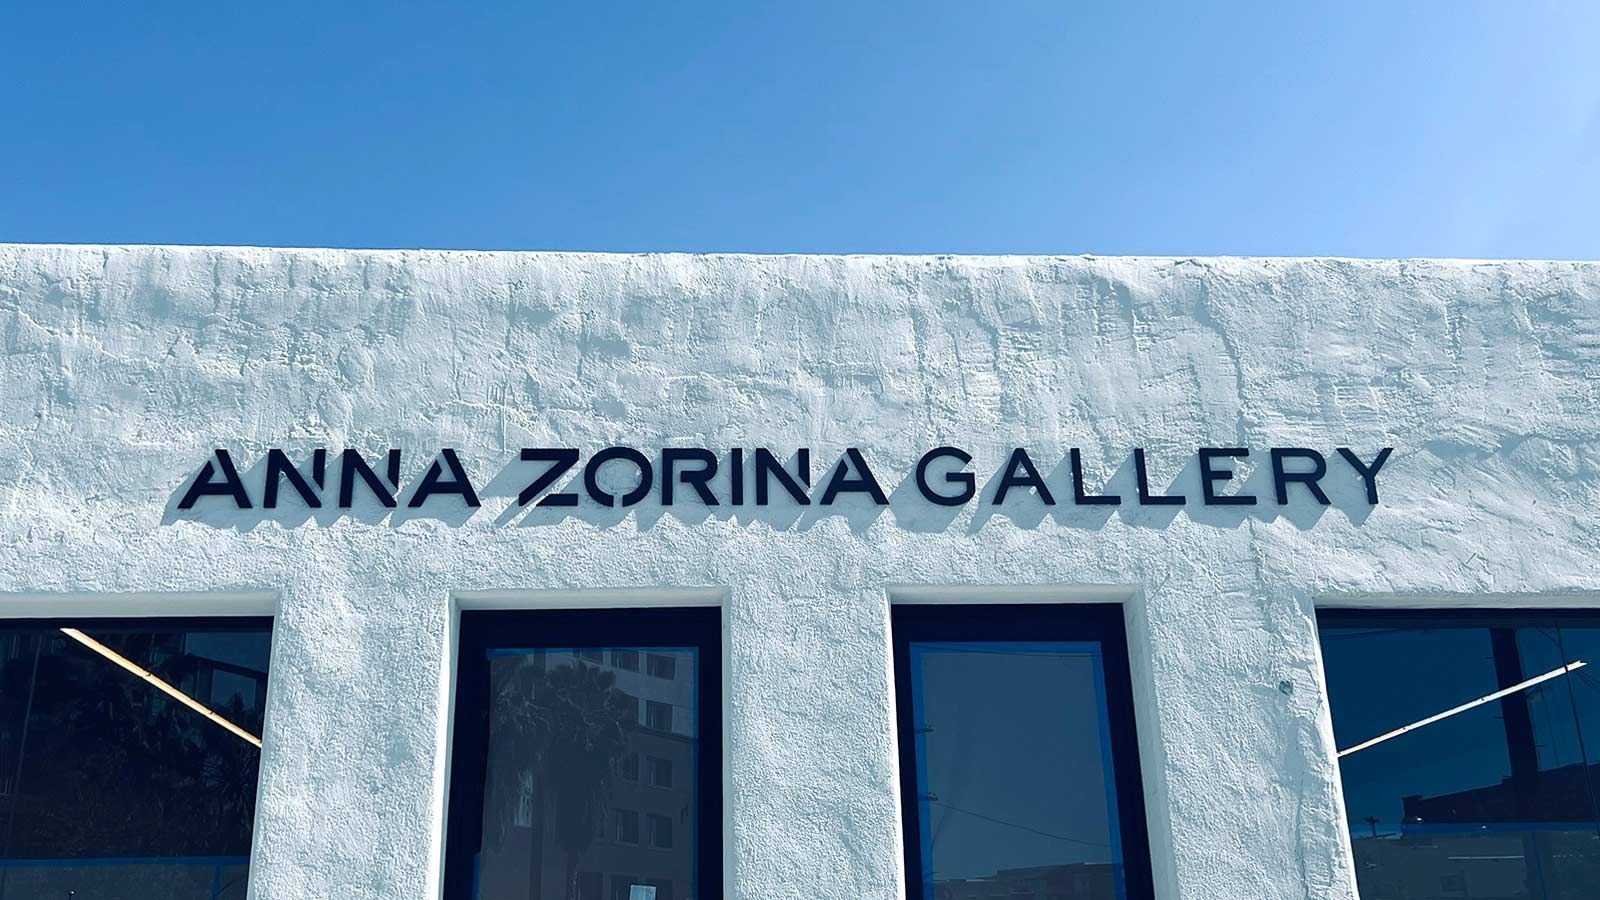 anna zorina gallery outdoor sign